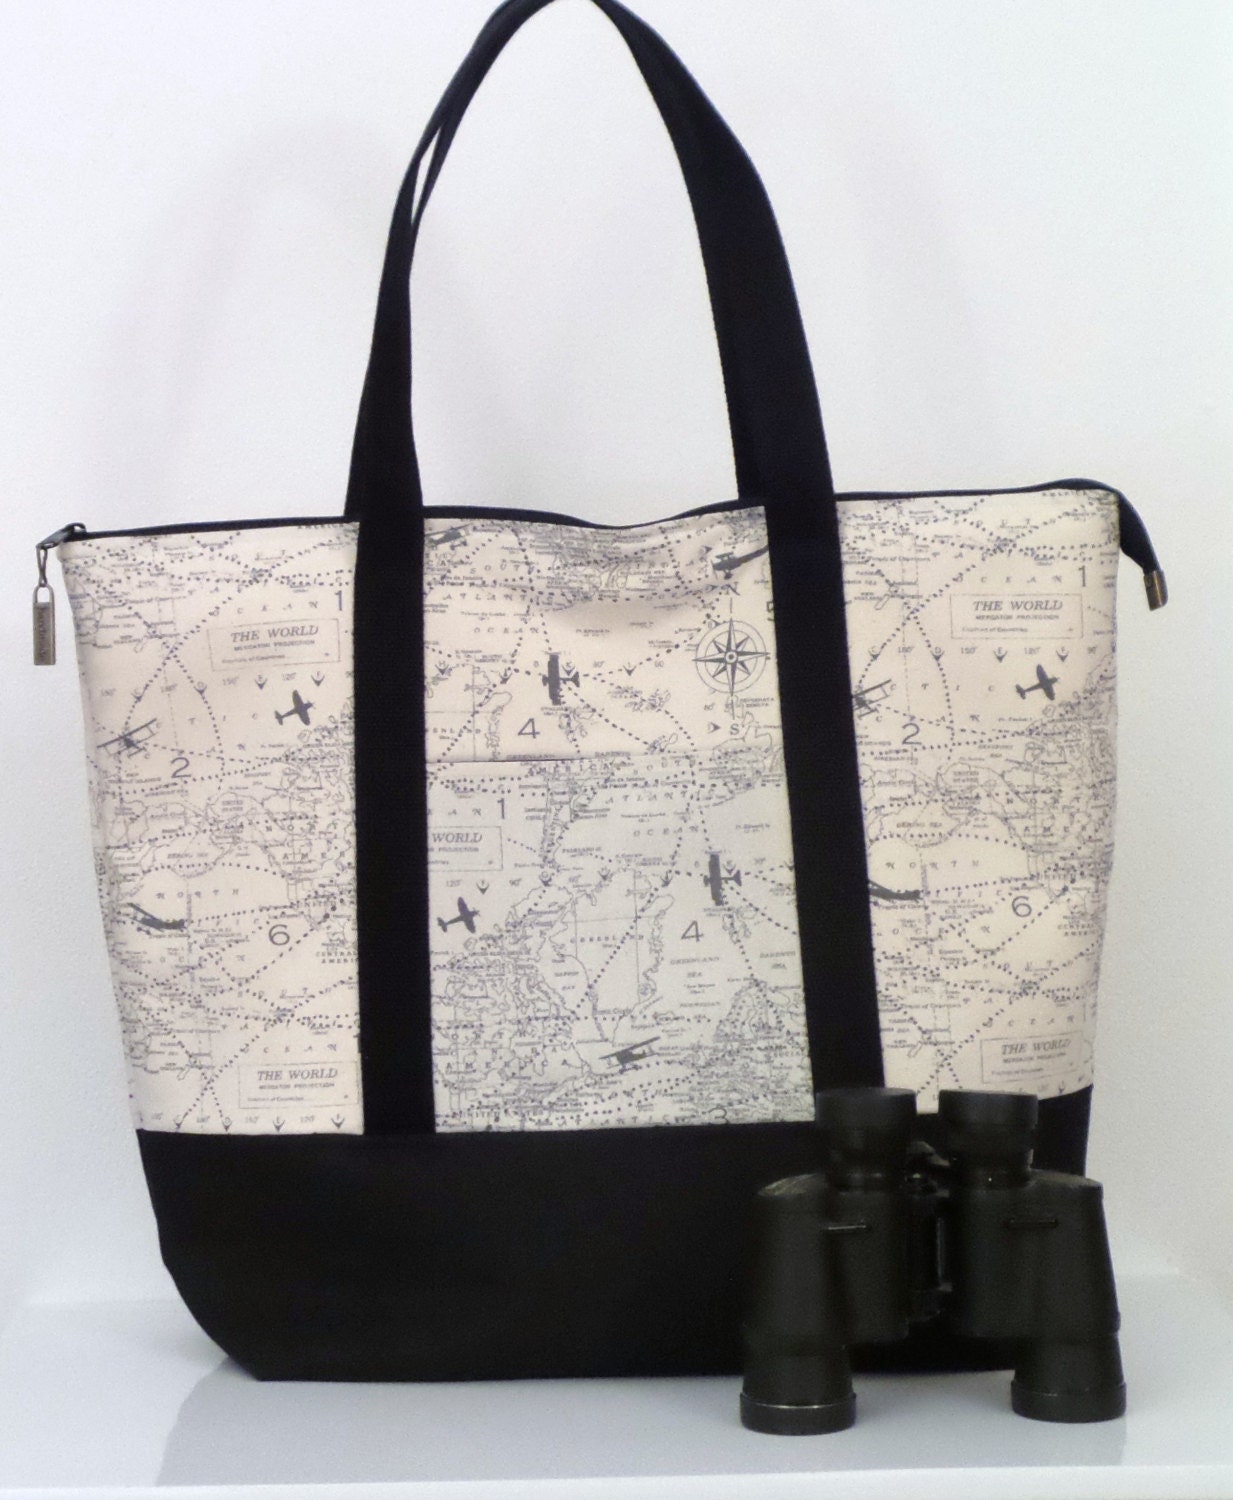 Tote Bag / Large Tote / Zippered Tote / Gym Bag / Travel Bag